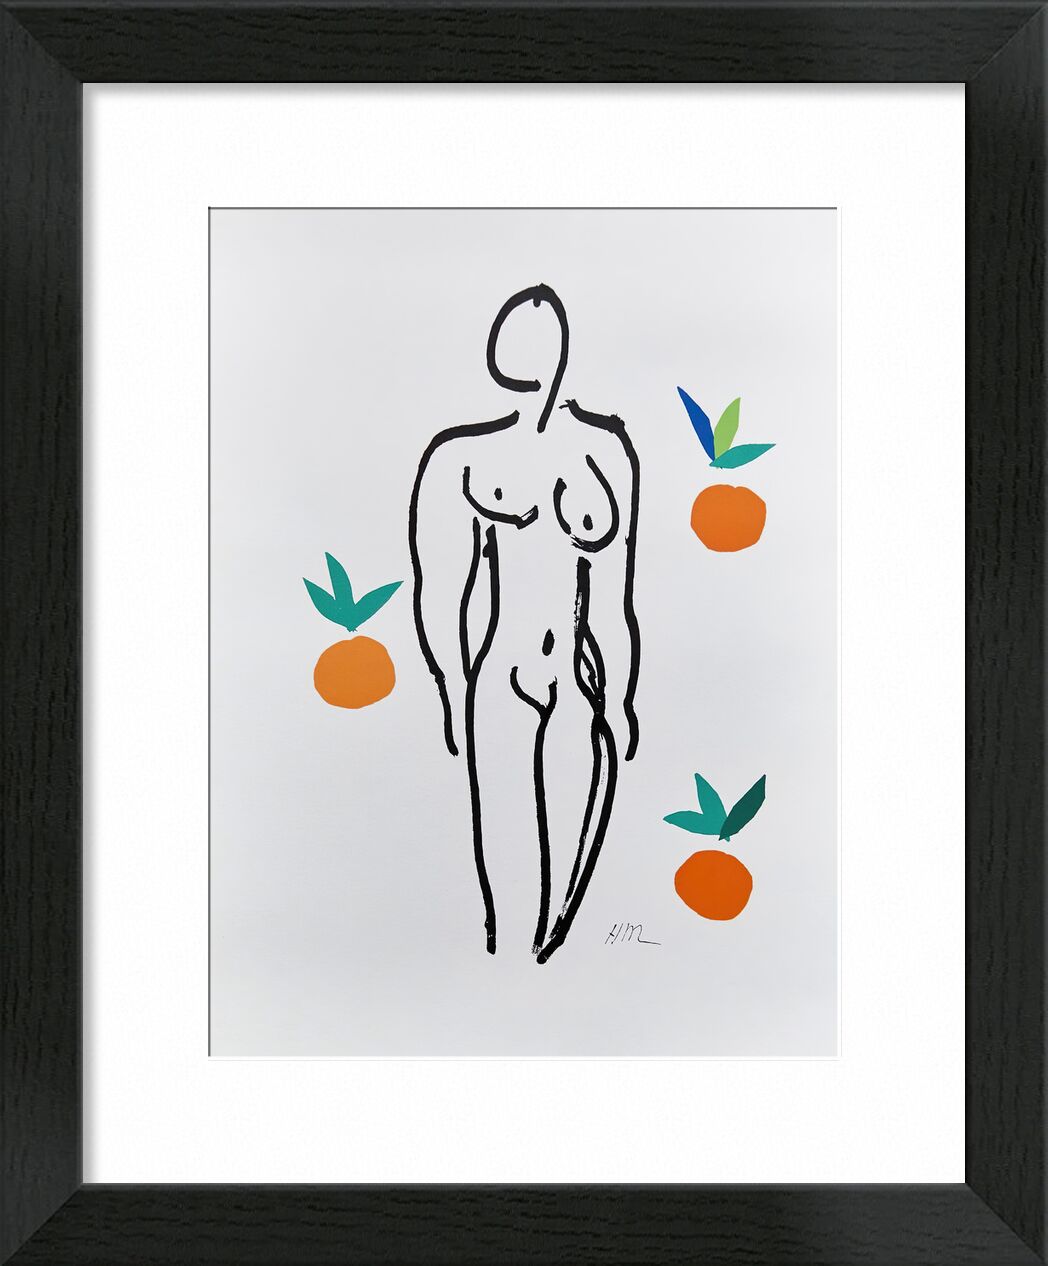 Verve, Nude with Oranges - Henri Matisse desde Bellas artes, Prodi Art, cocina, Fruta, naranja, mujer, desnudo, Matisse